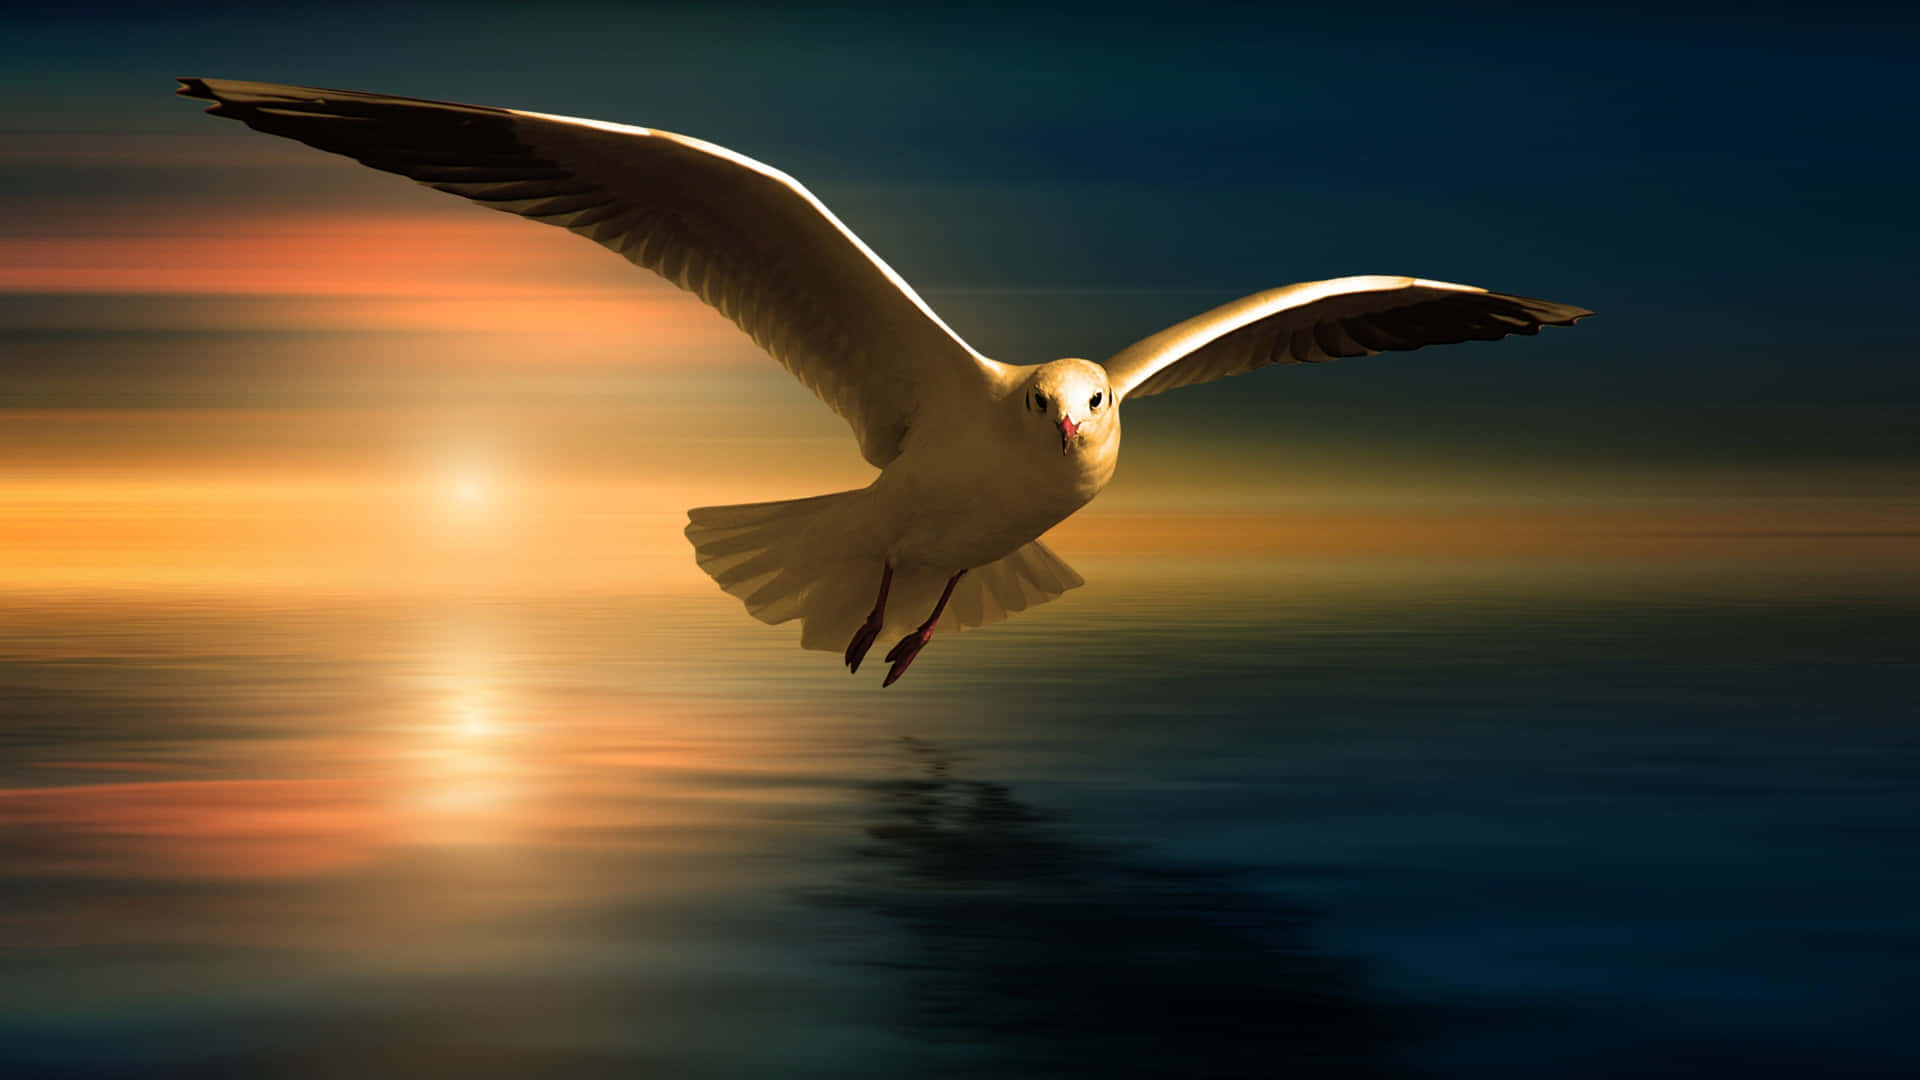 Graceful Seagull In Flight Background